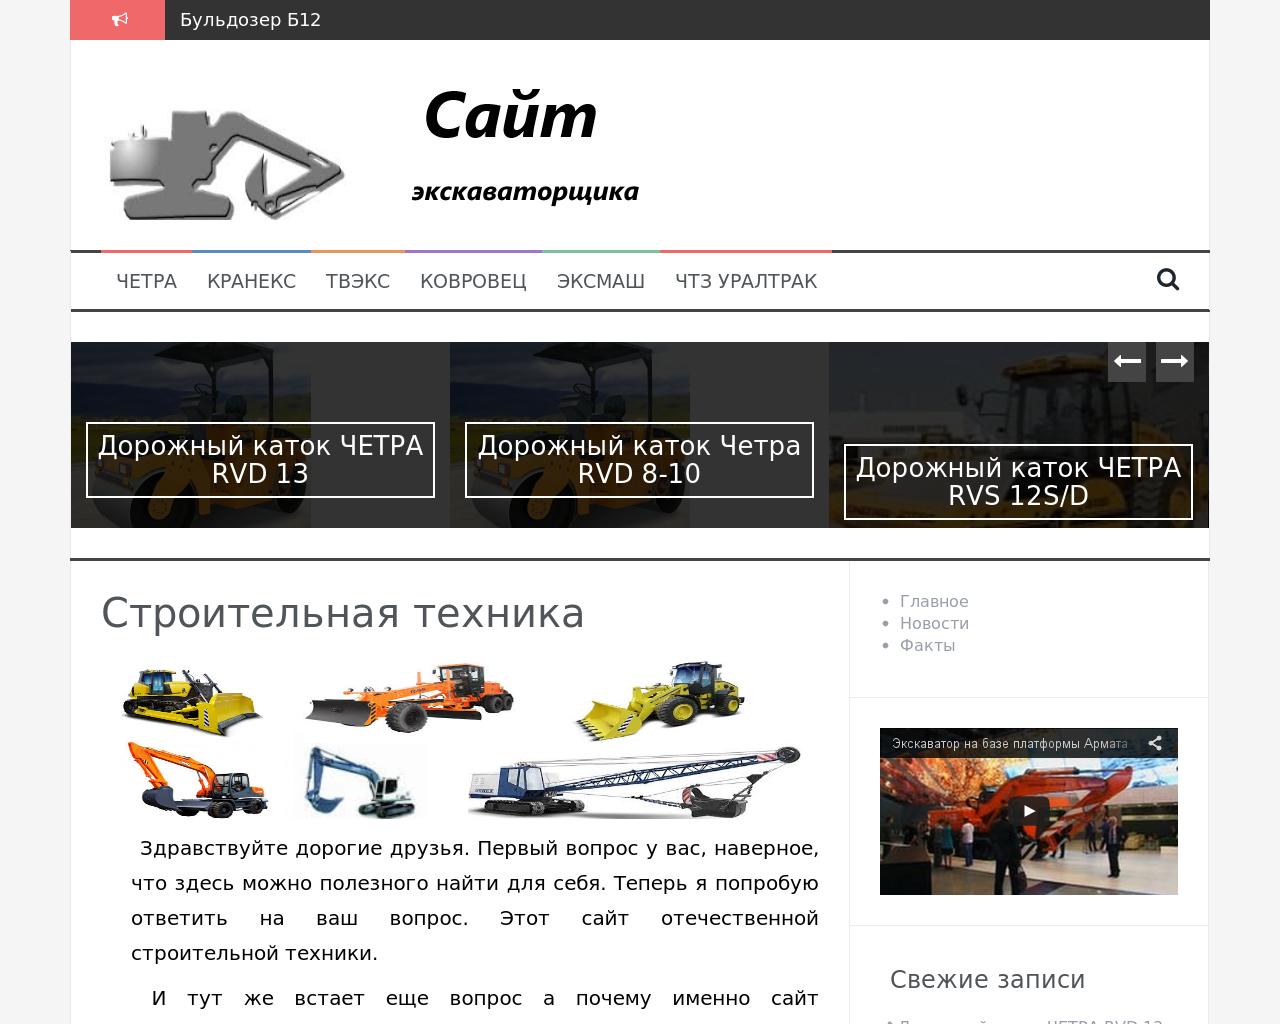 Изображение сайта saitexkavator.ru в разрешении 1280x1024